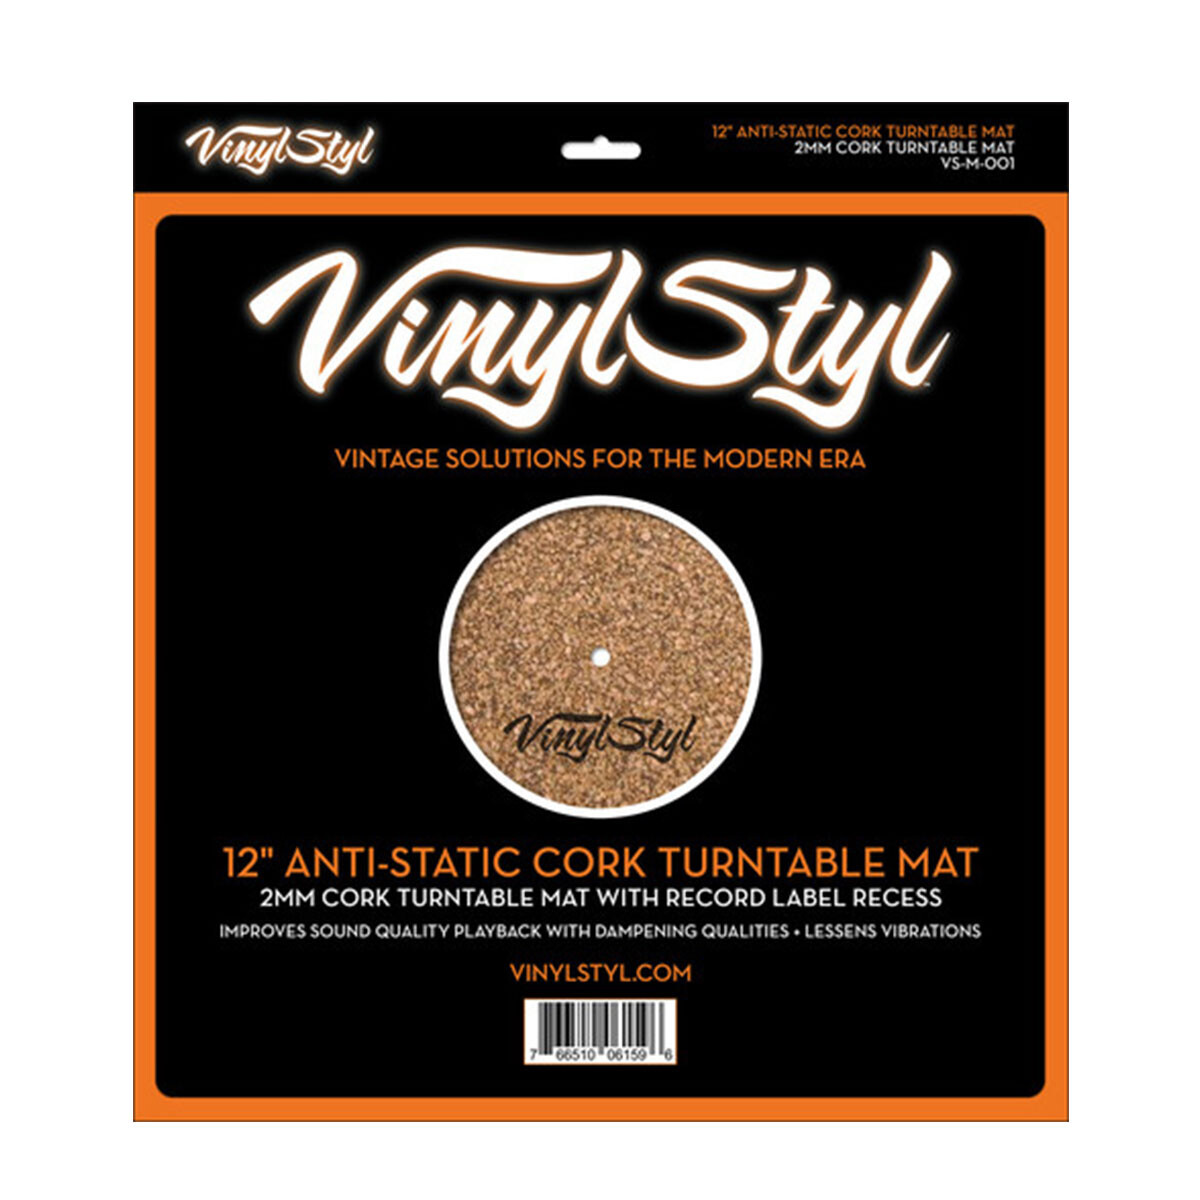 Vinyl Styl 12" Anti-static Cork Turntable Mat 